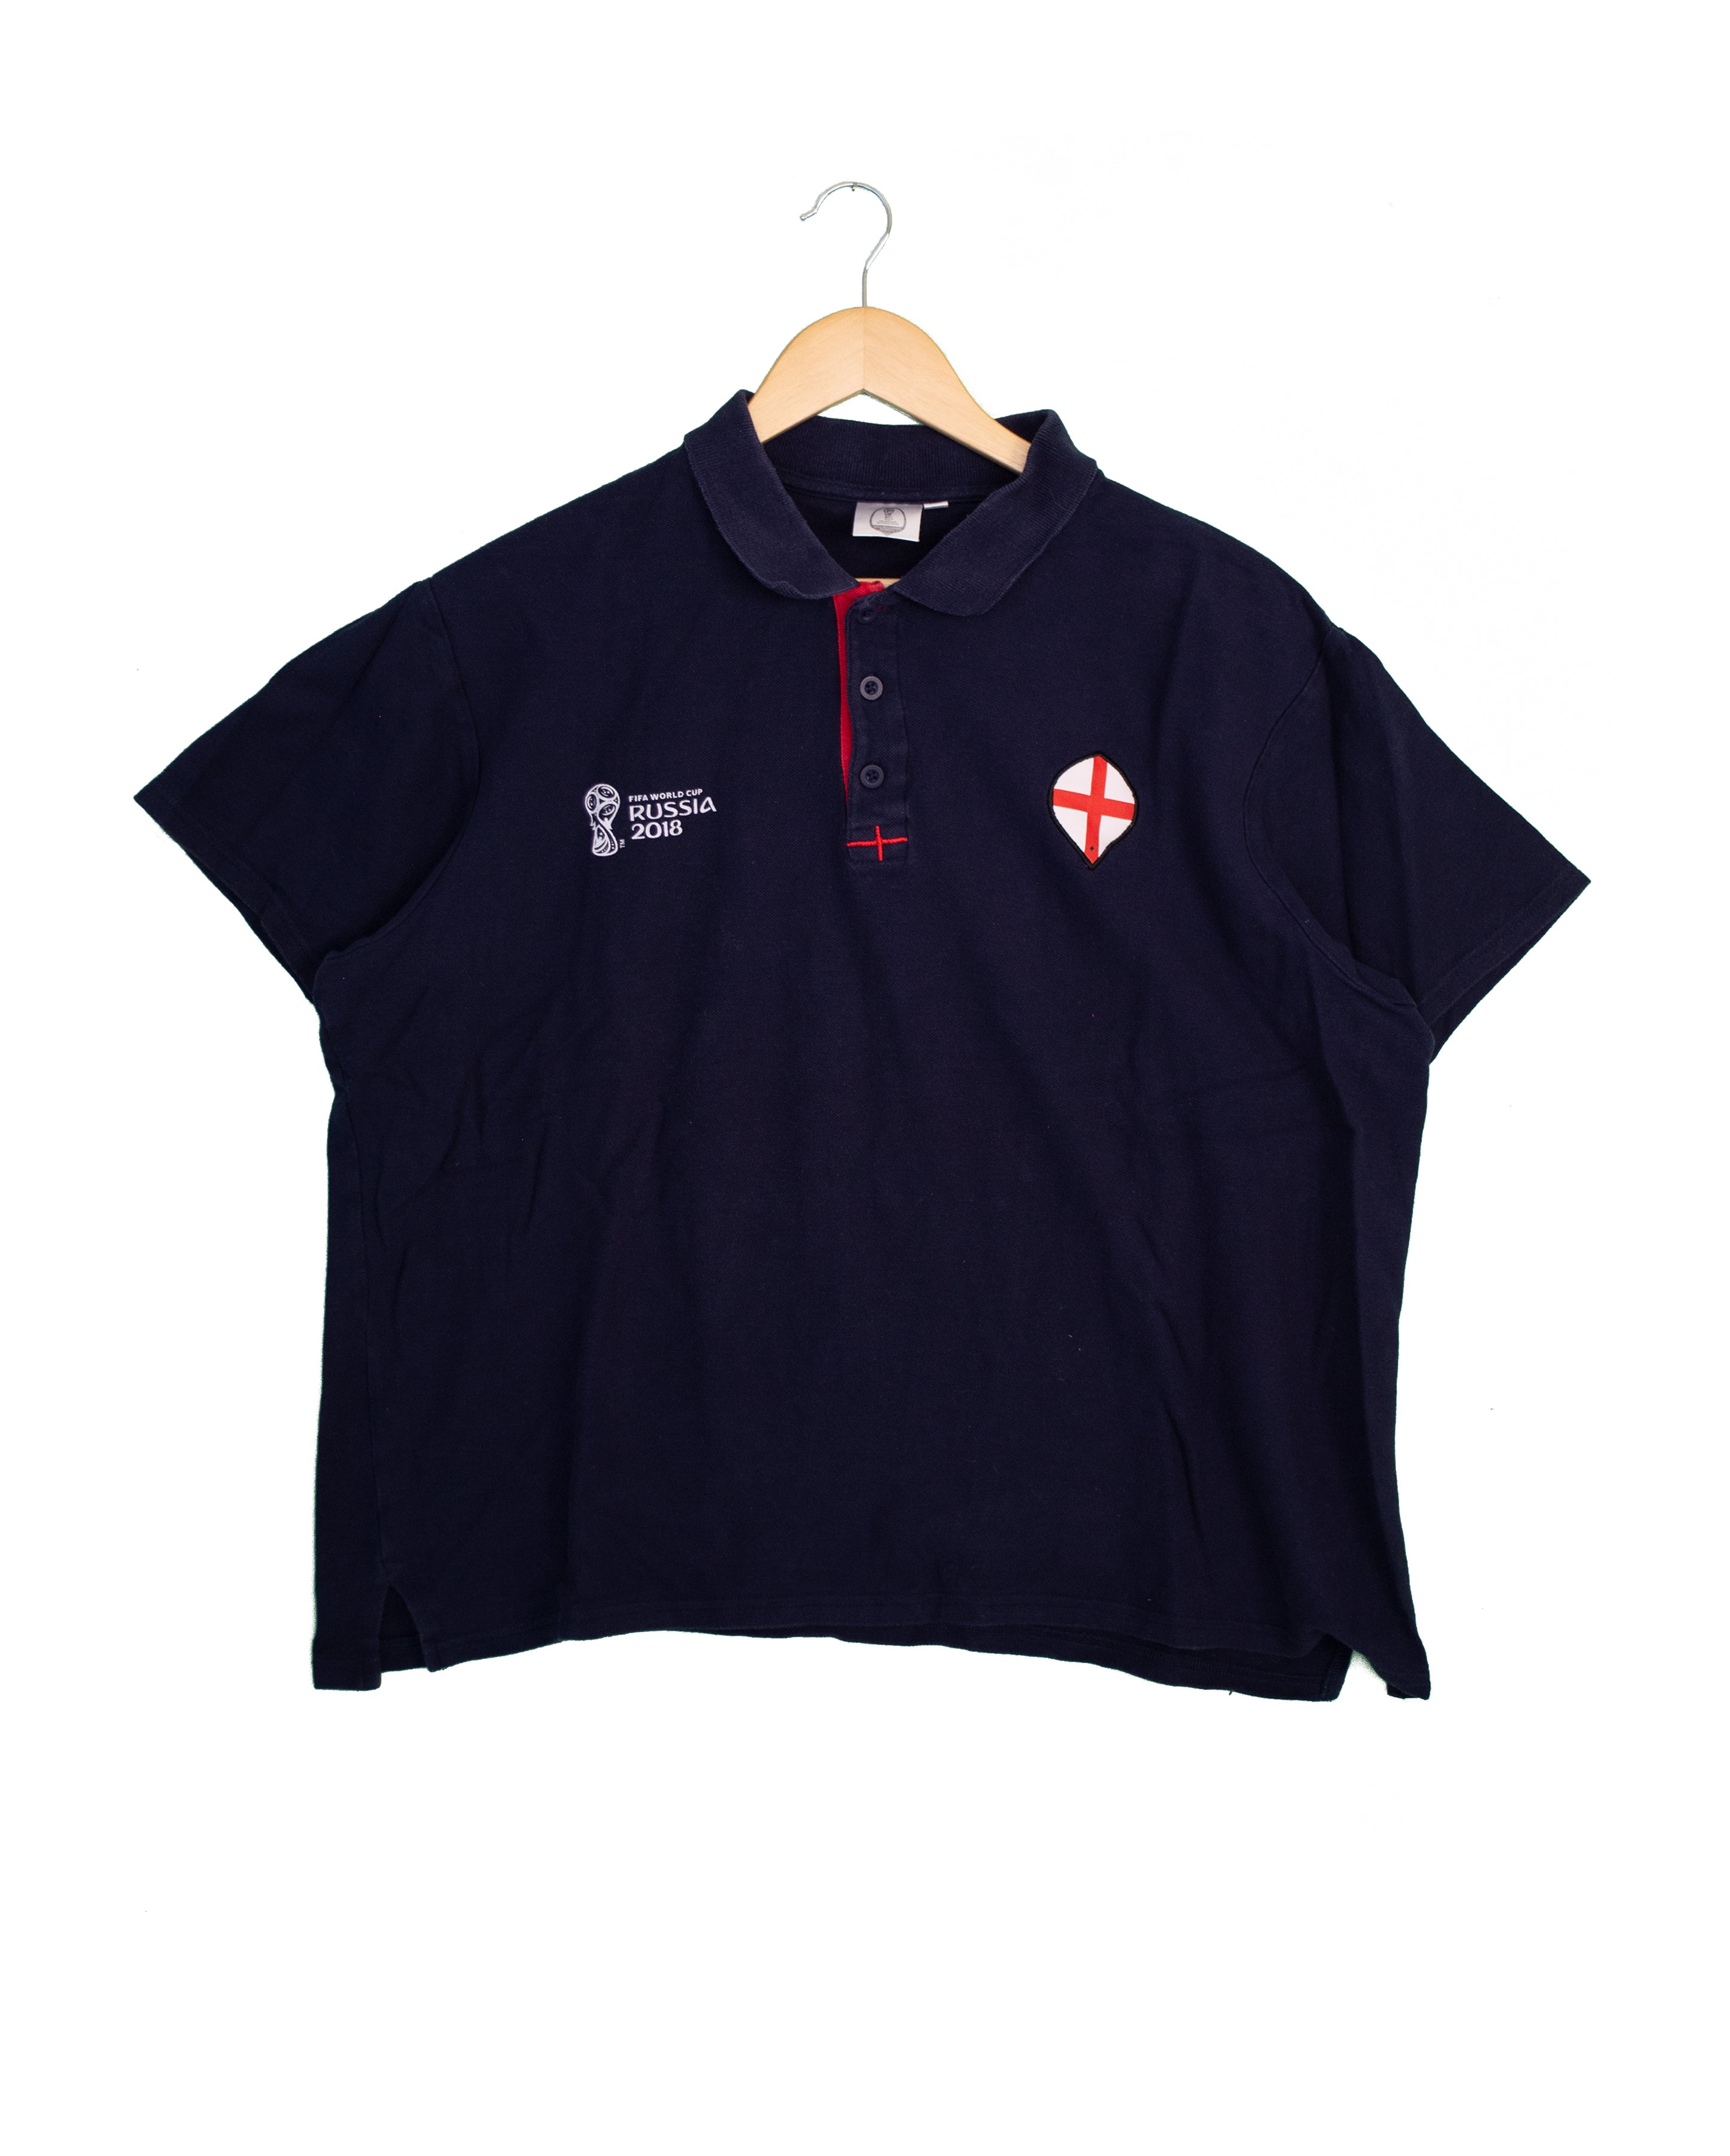 England 'World Cup 2018' Polo Shirt - XL - #1709